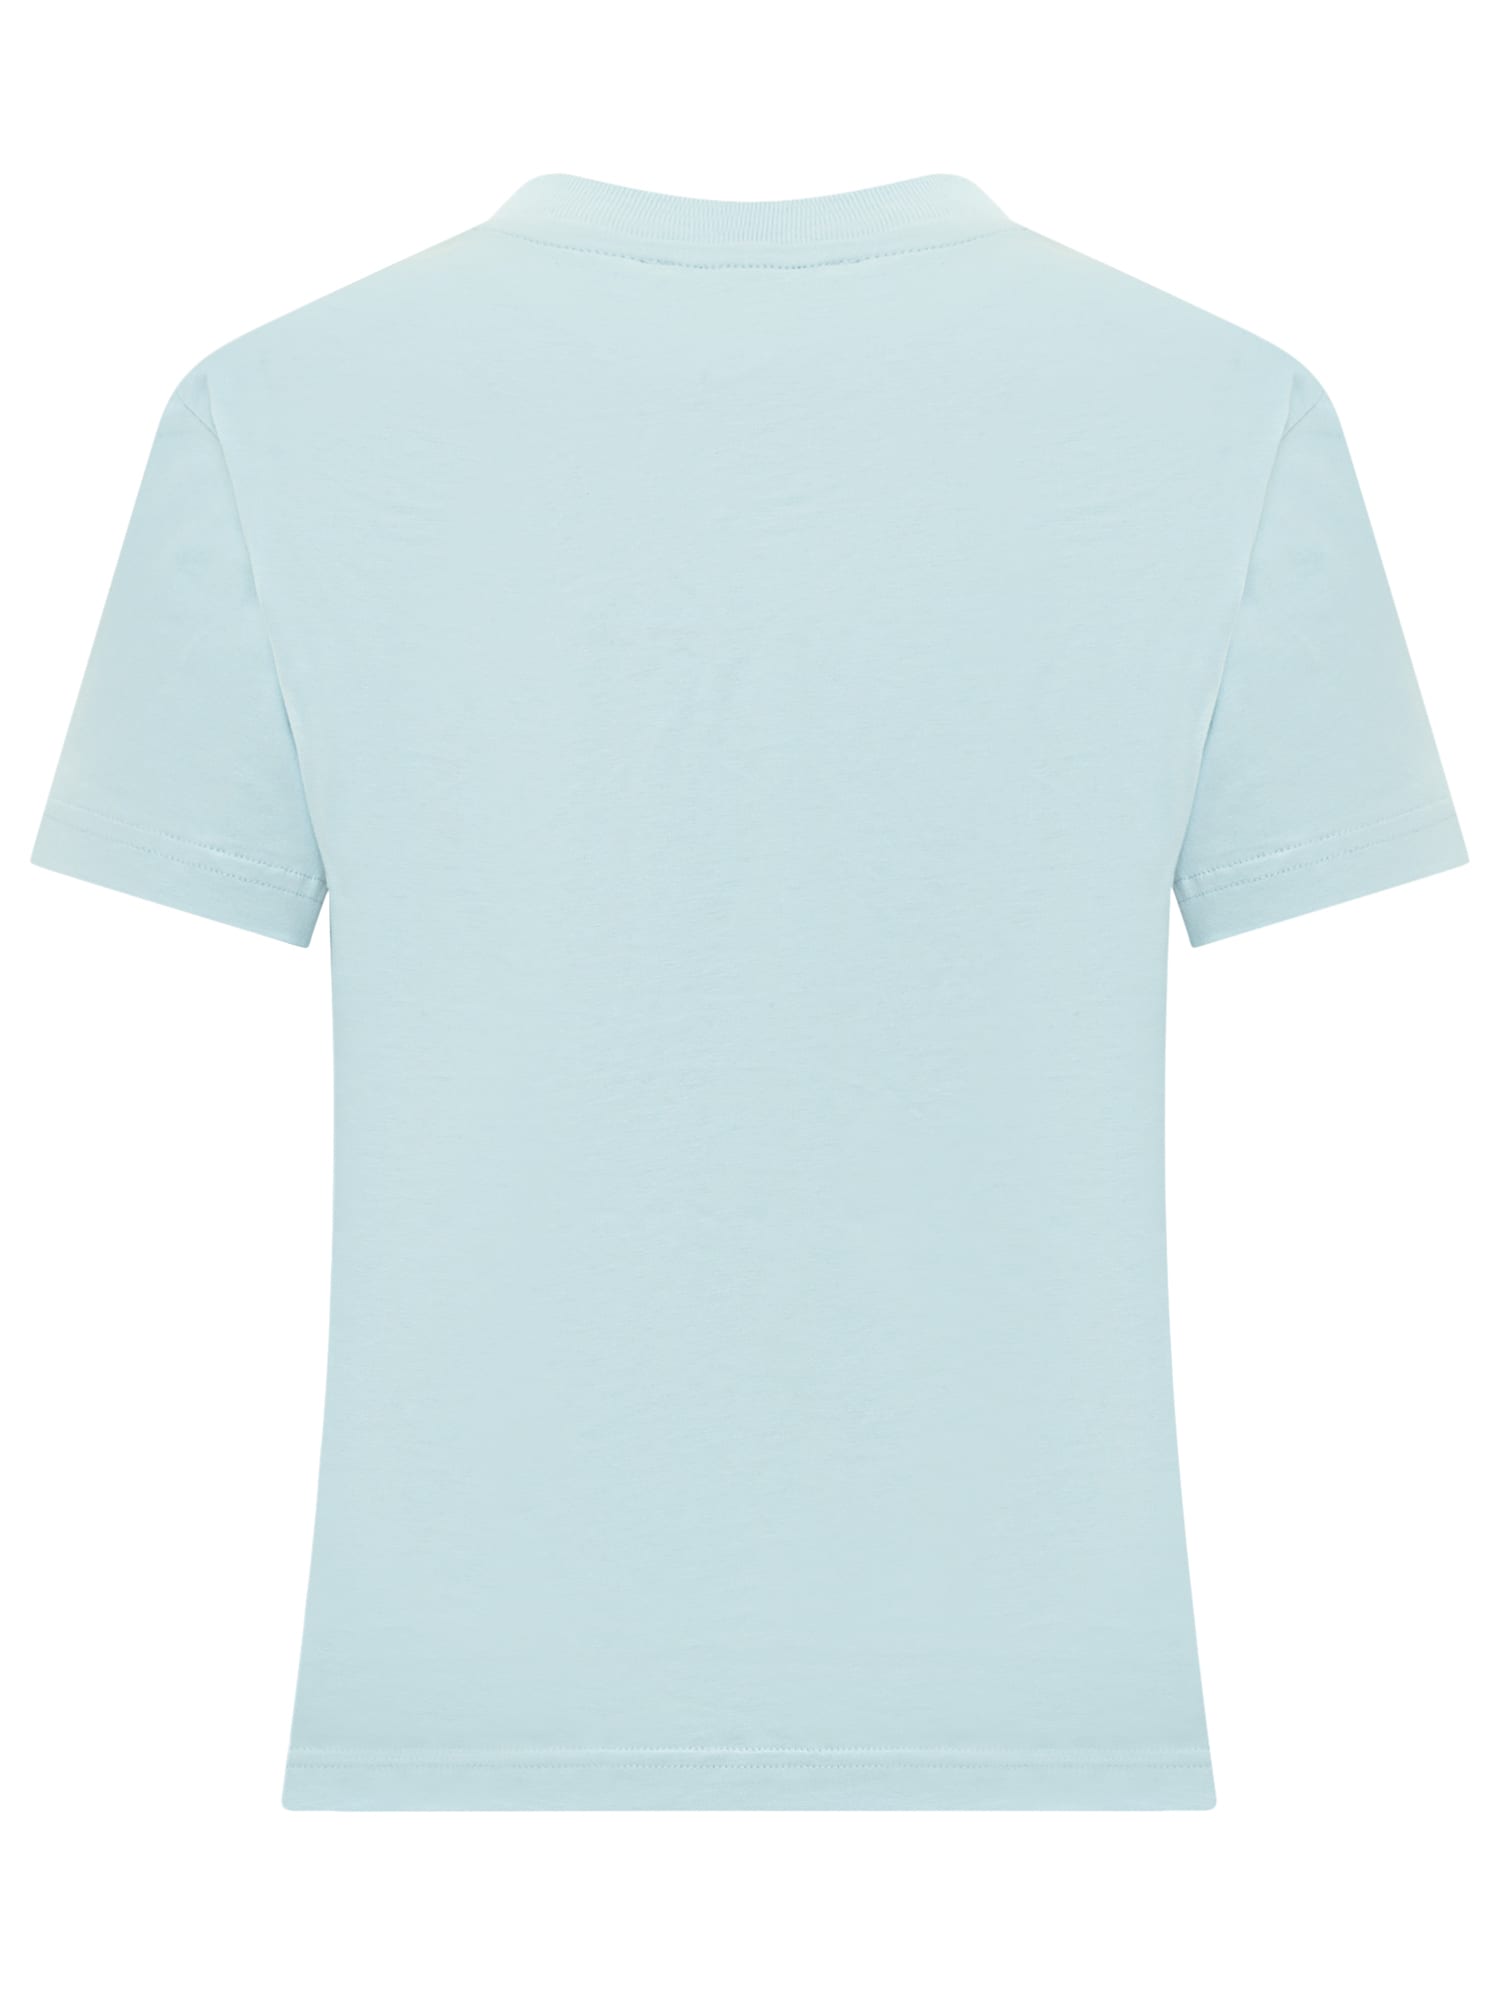 Shop Casablanca Tennis Club T-shirt In Azzurro